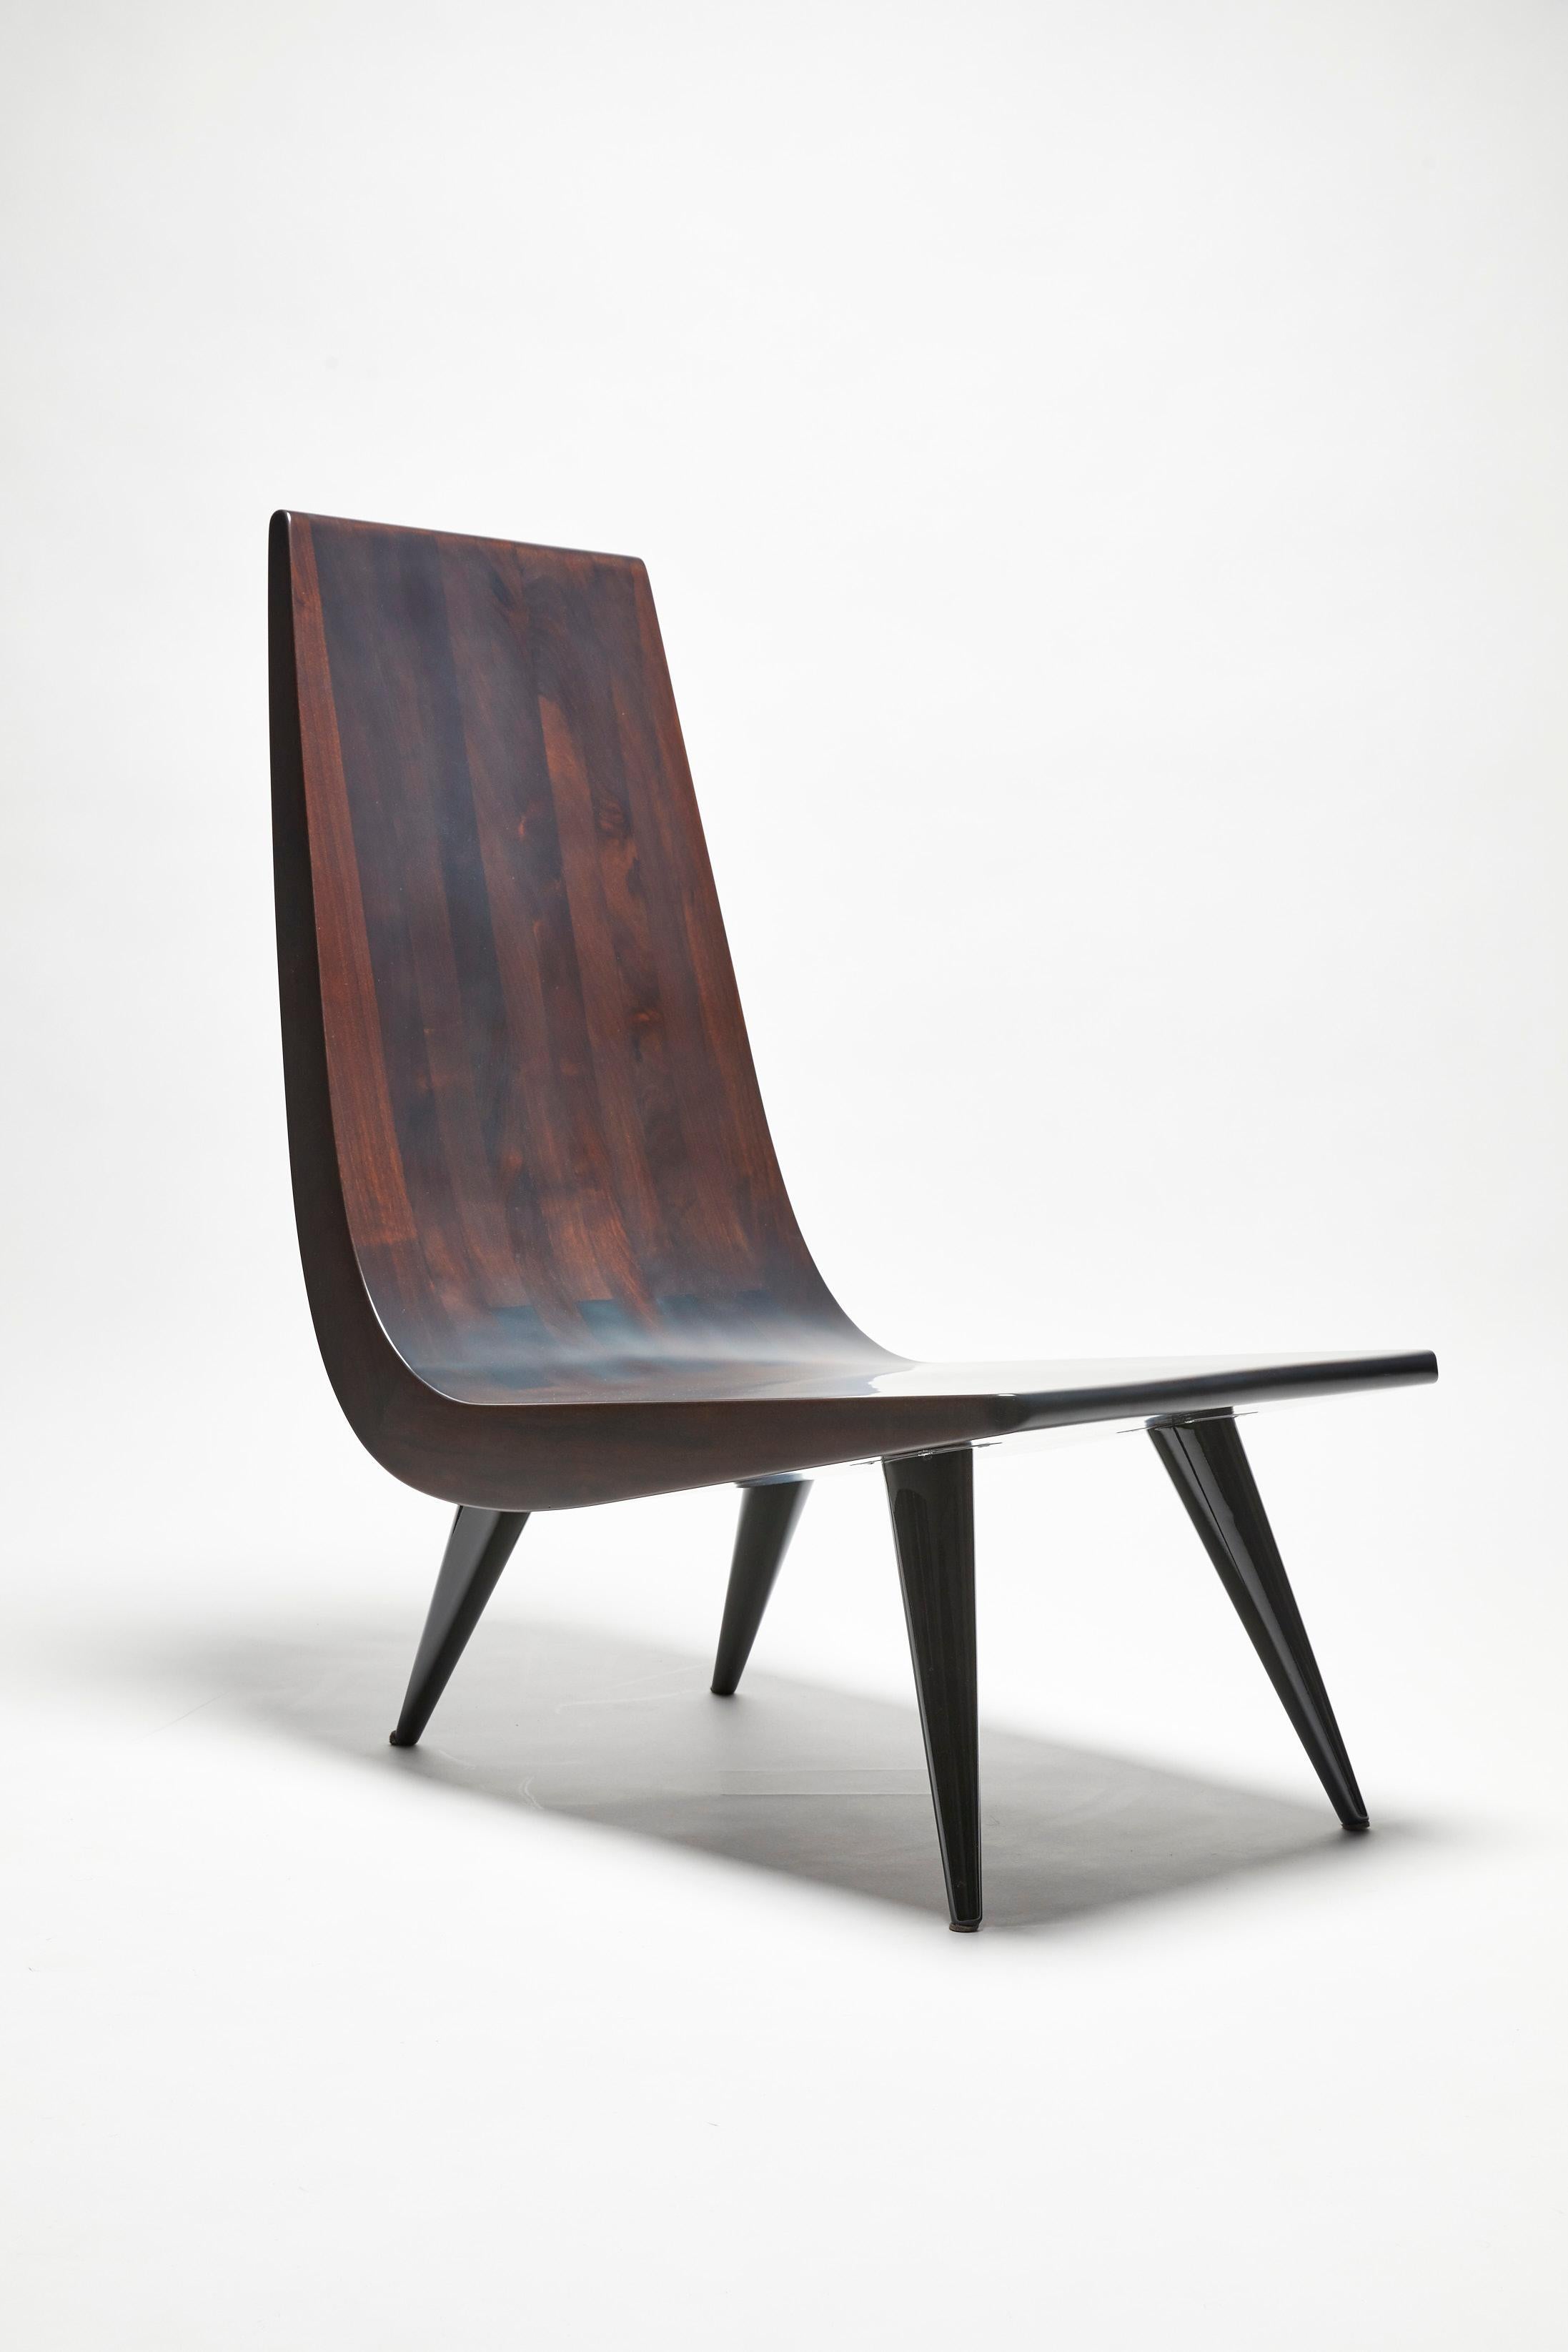 Italian Lounge chair, JAH, by Reda Amalou, 2019, Walnut and Steel legs 